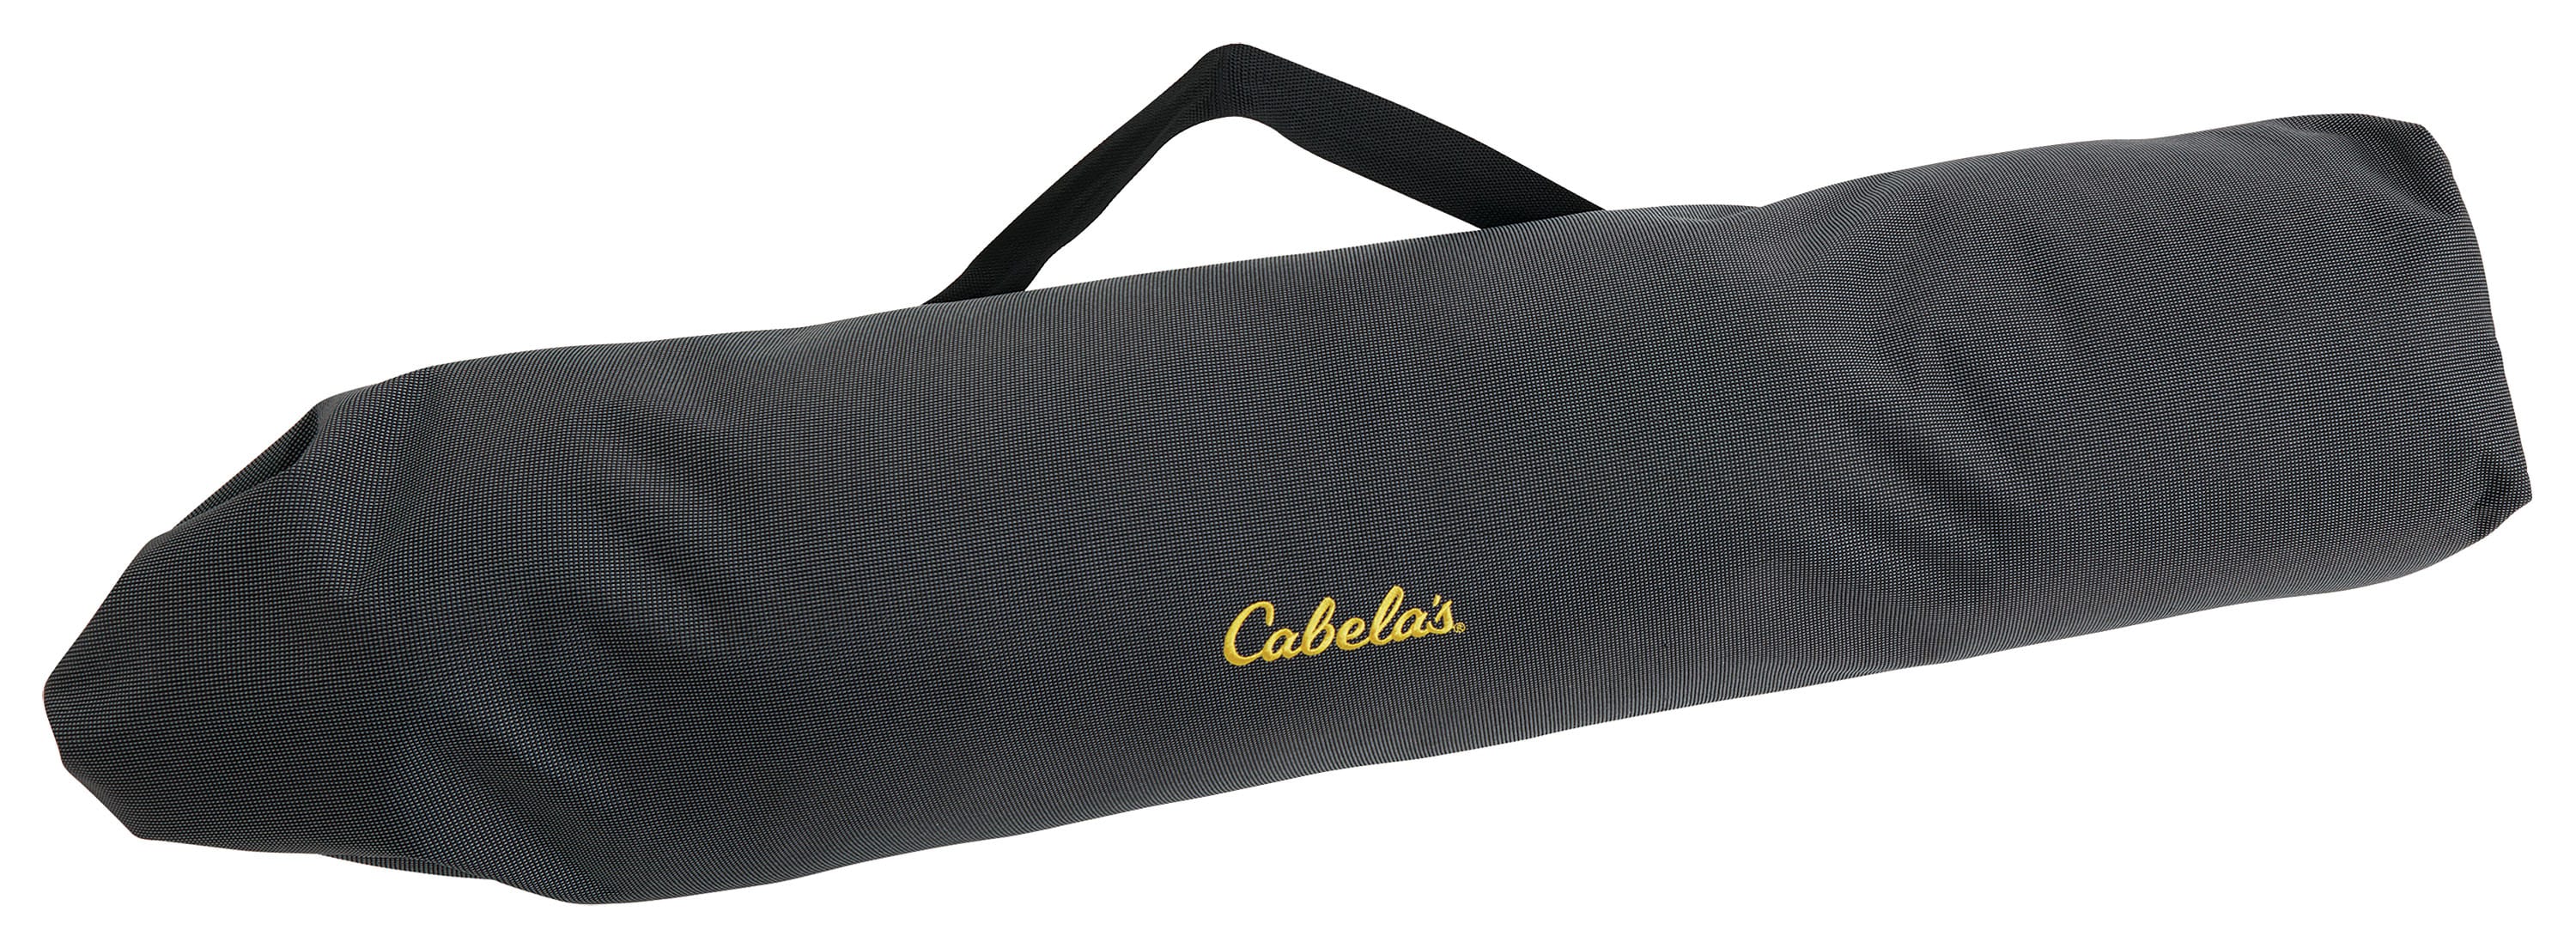 Cabela's® Big Outdoorsman Cot with Lever Arm